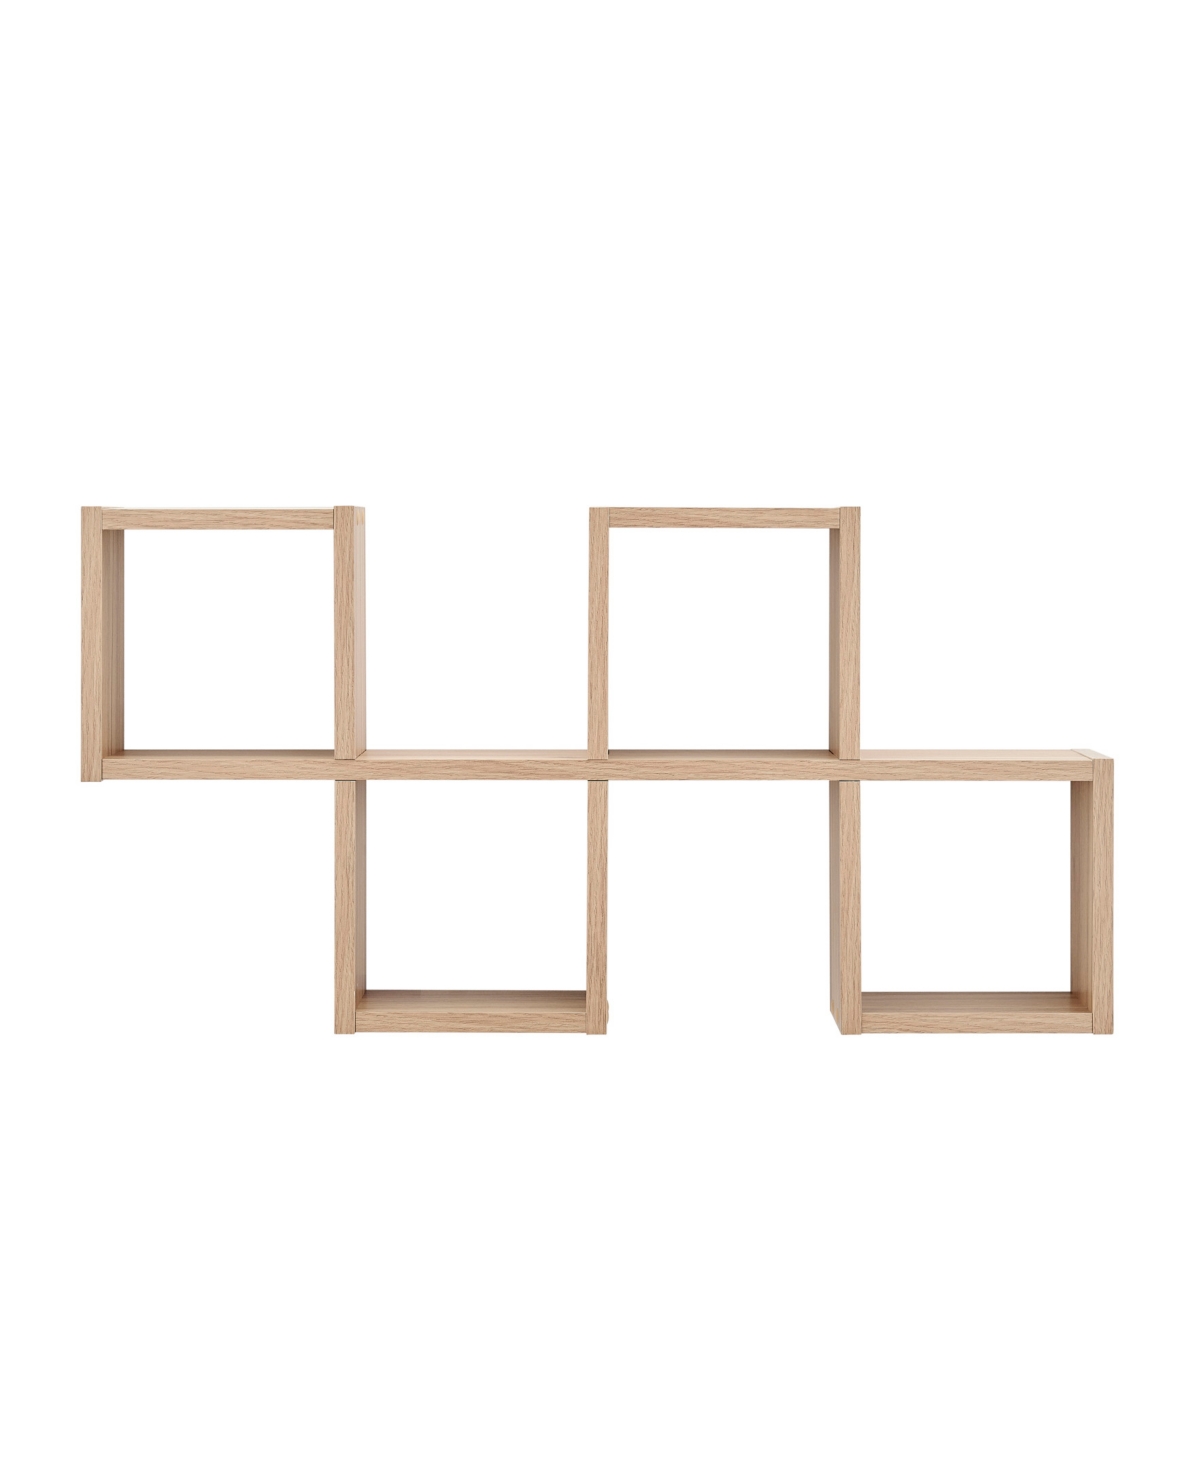 Cubby Chessboard Wall Shelf, Horizontal or Vertical - Chestnut